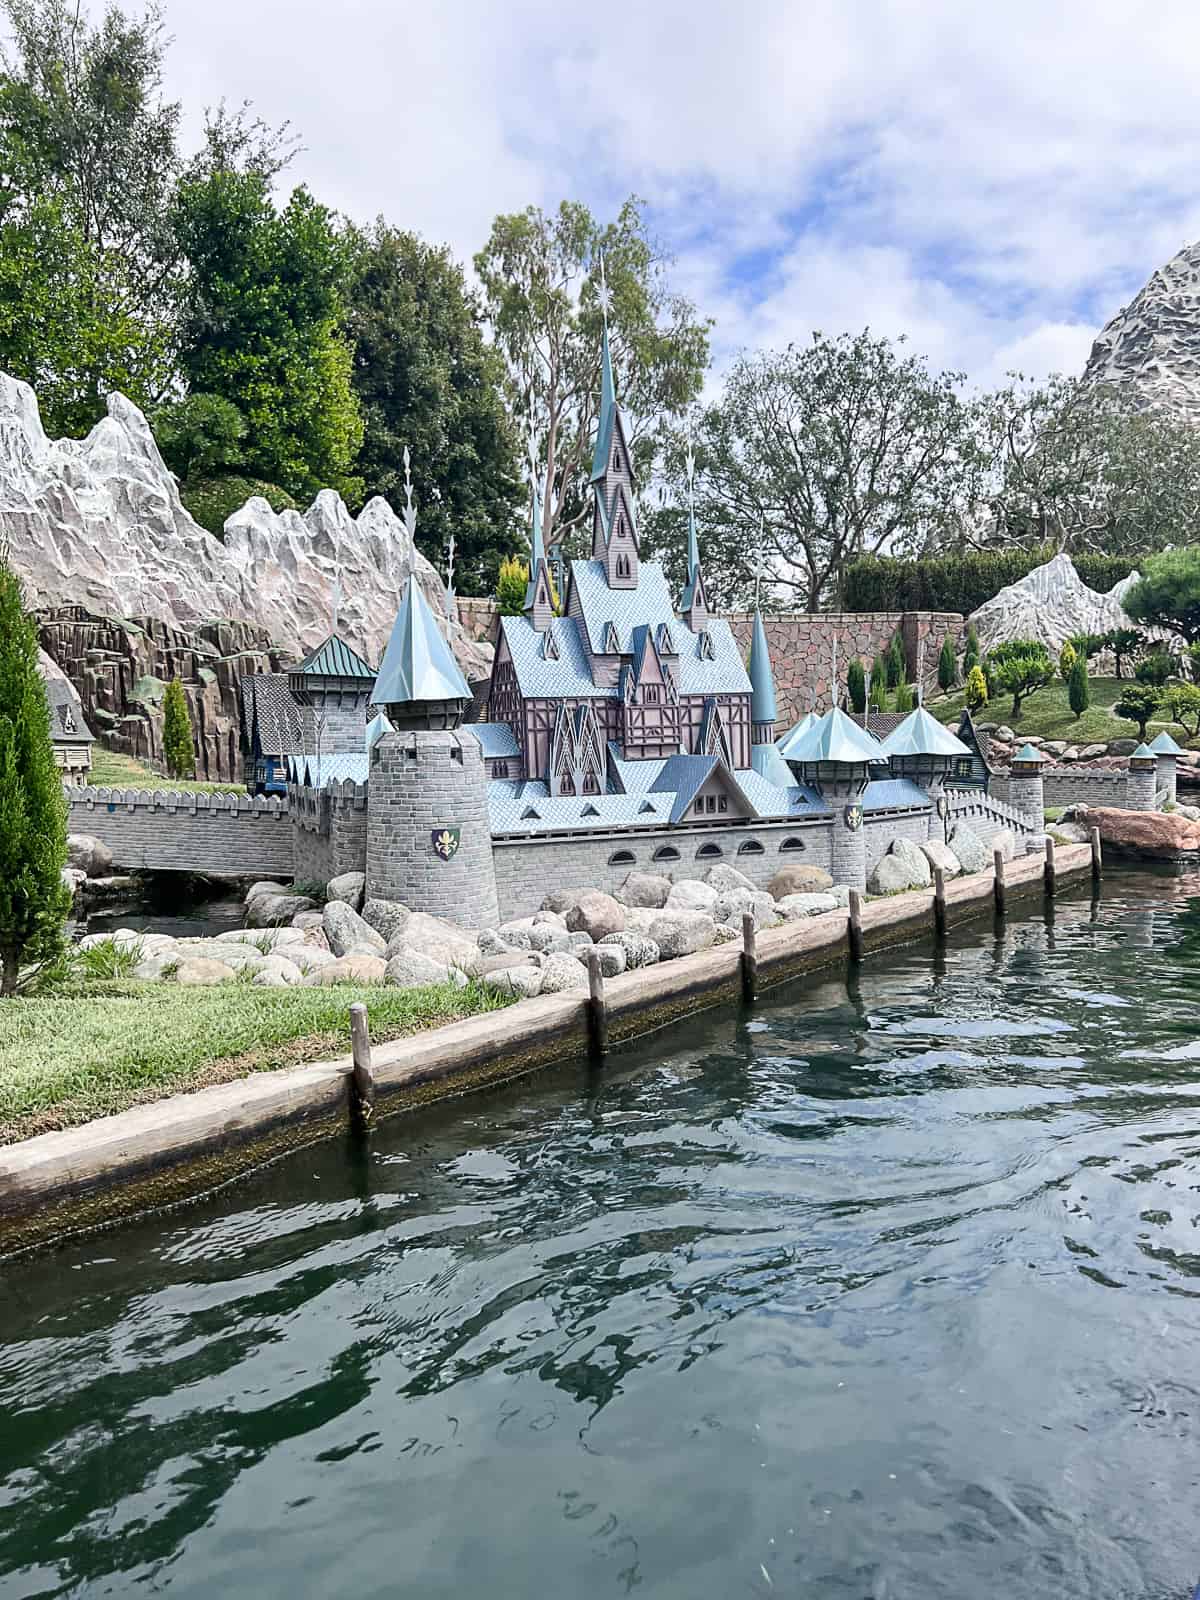 Frozen Castle mini replica on the Storybook Land boat ride